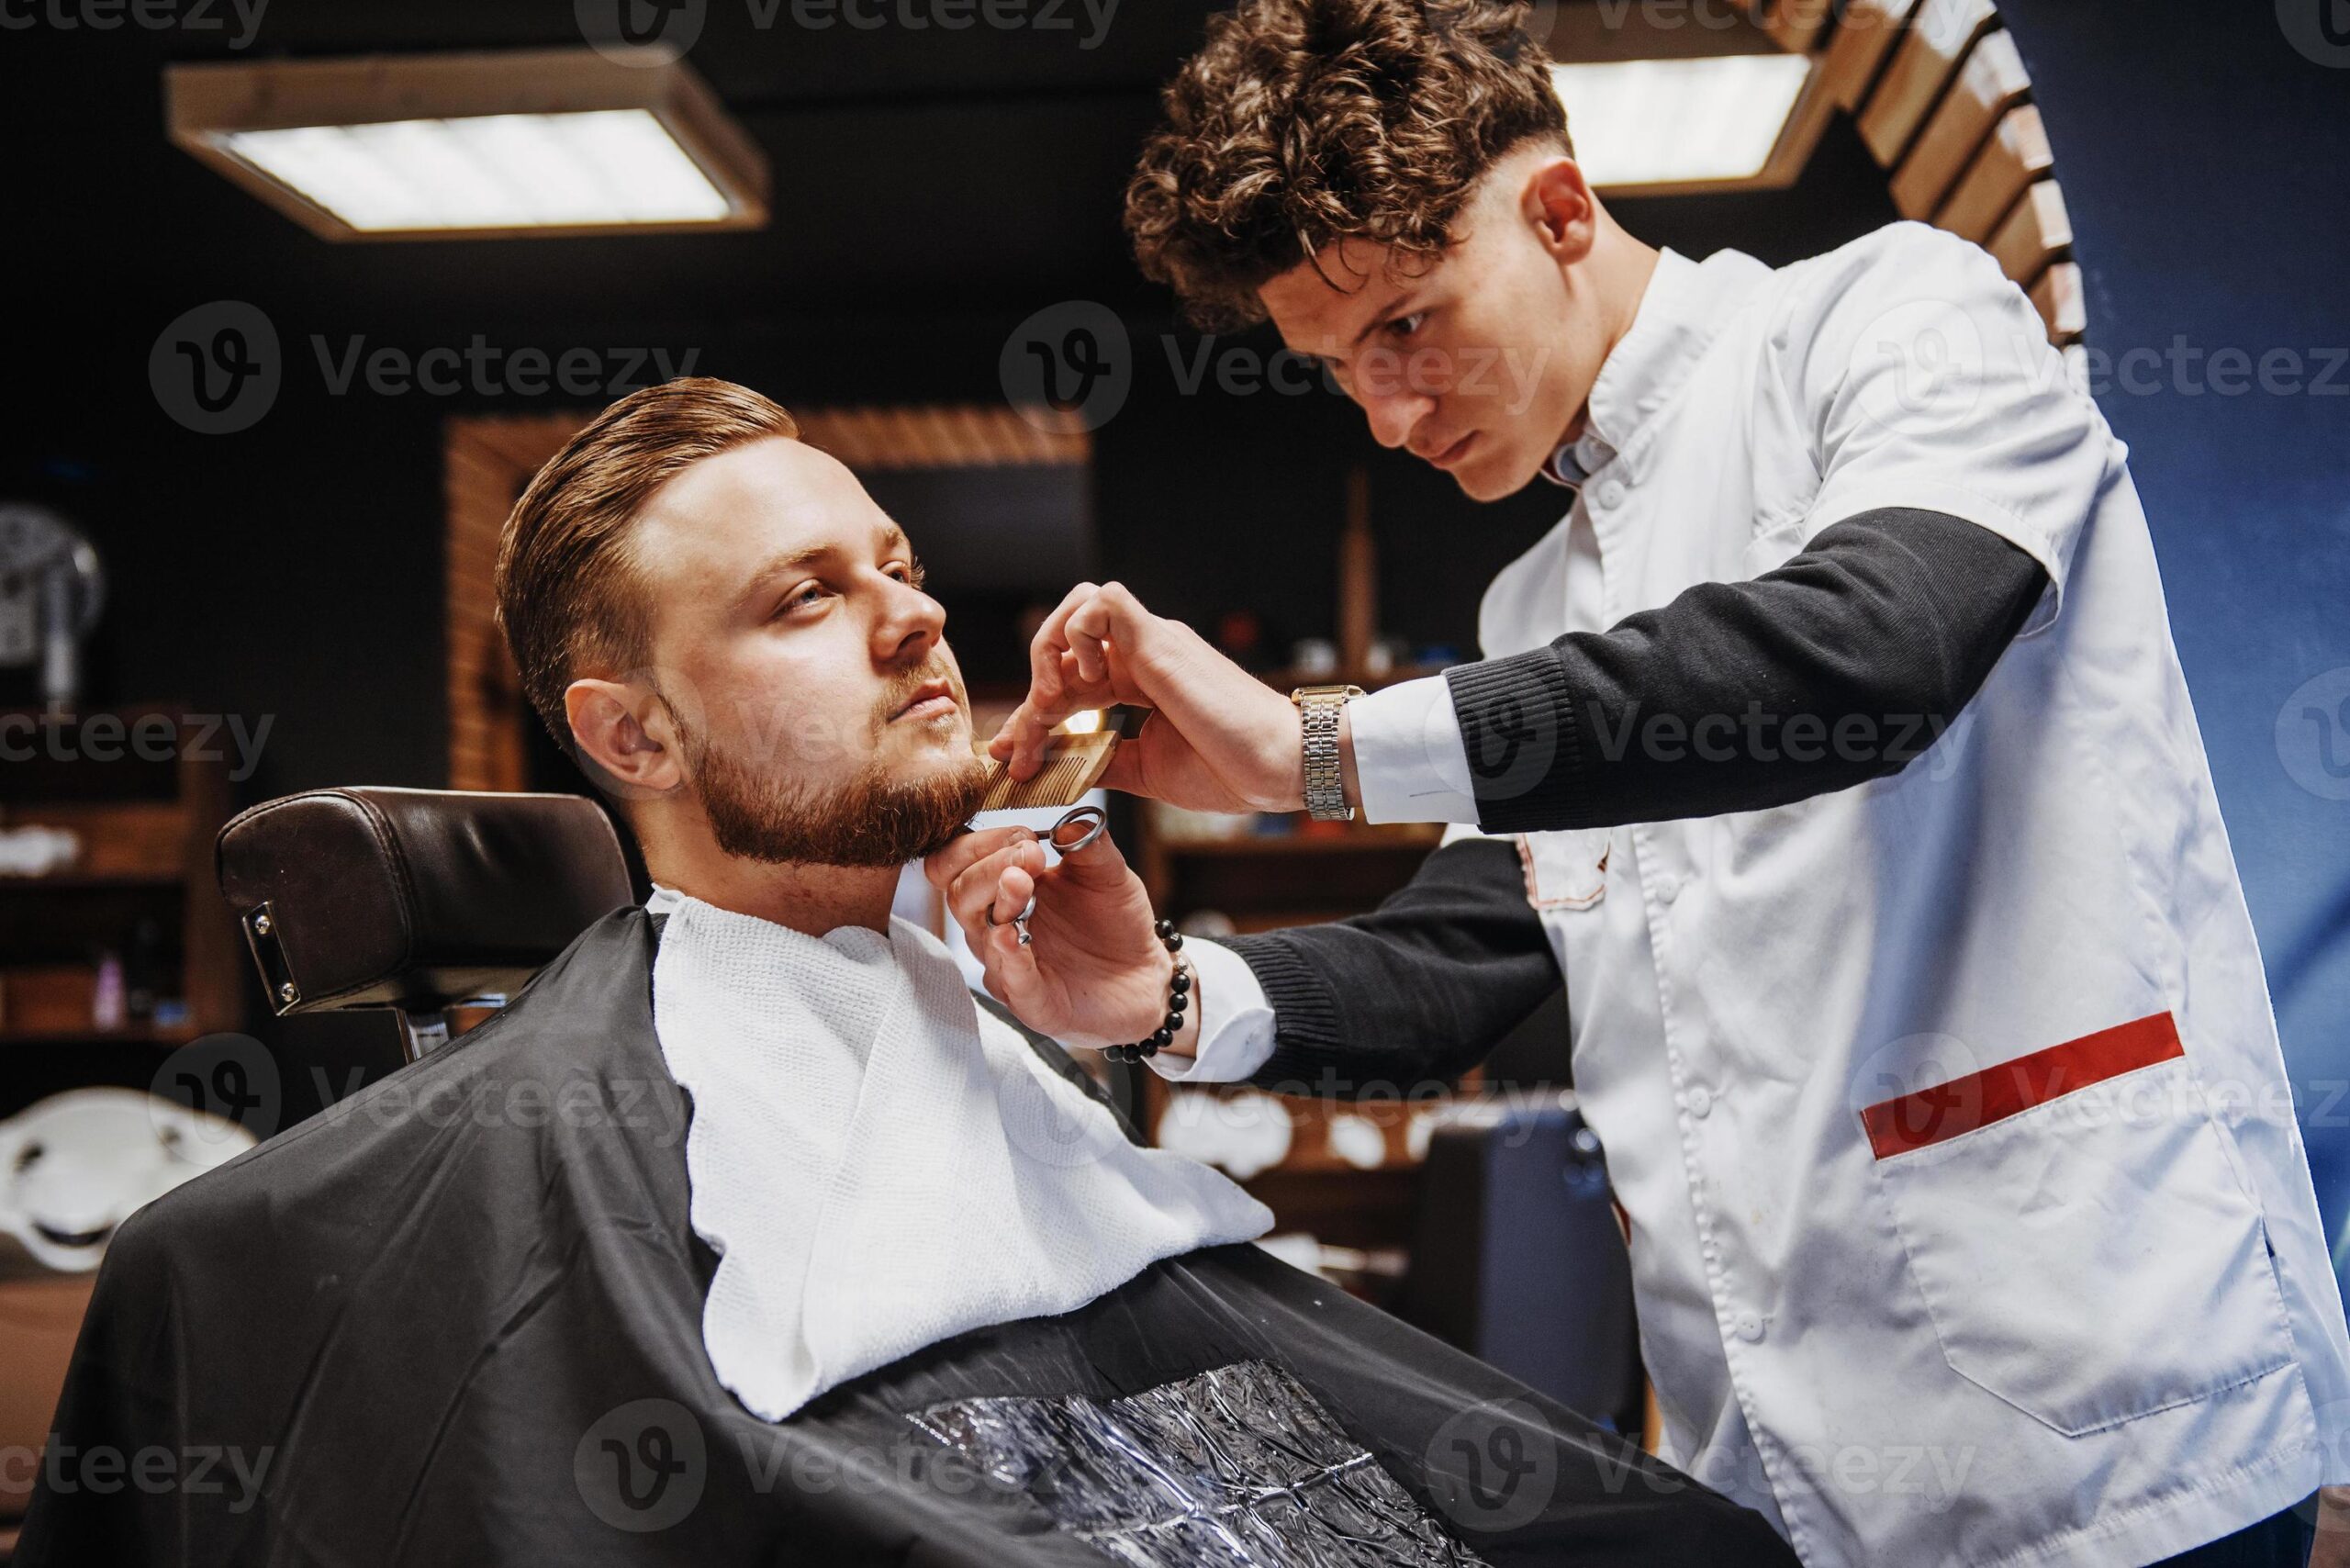 Barber Jobs In USA With Visa Sponsorship